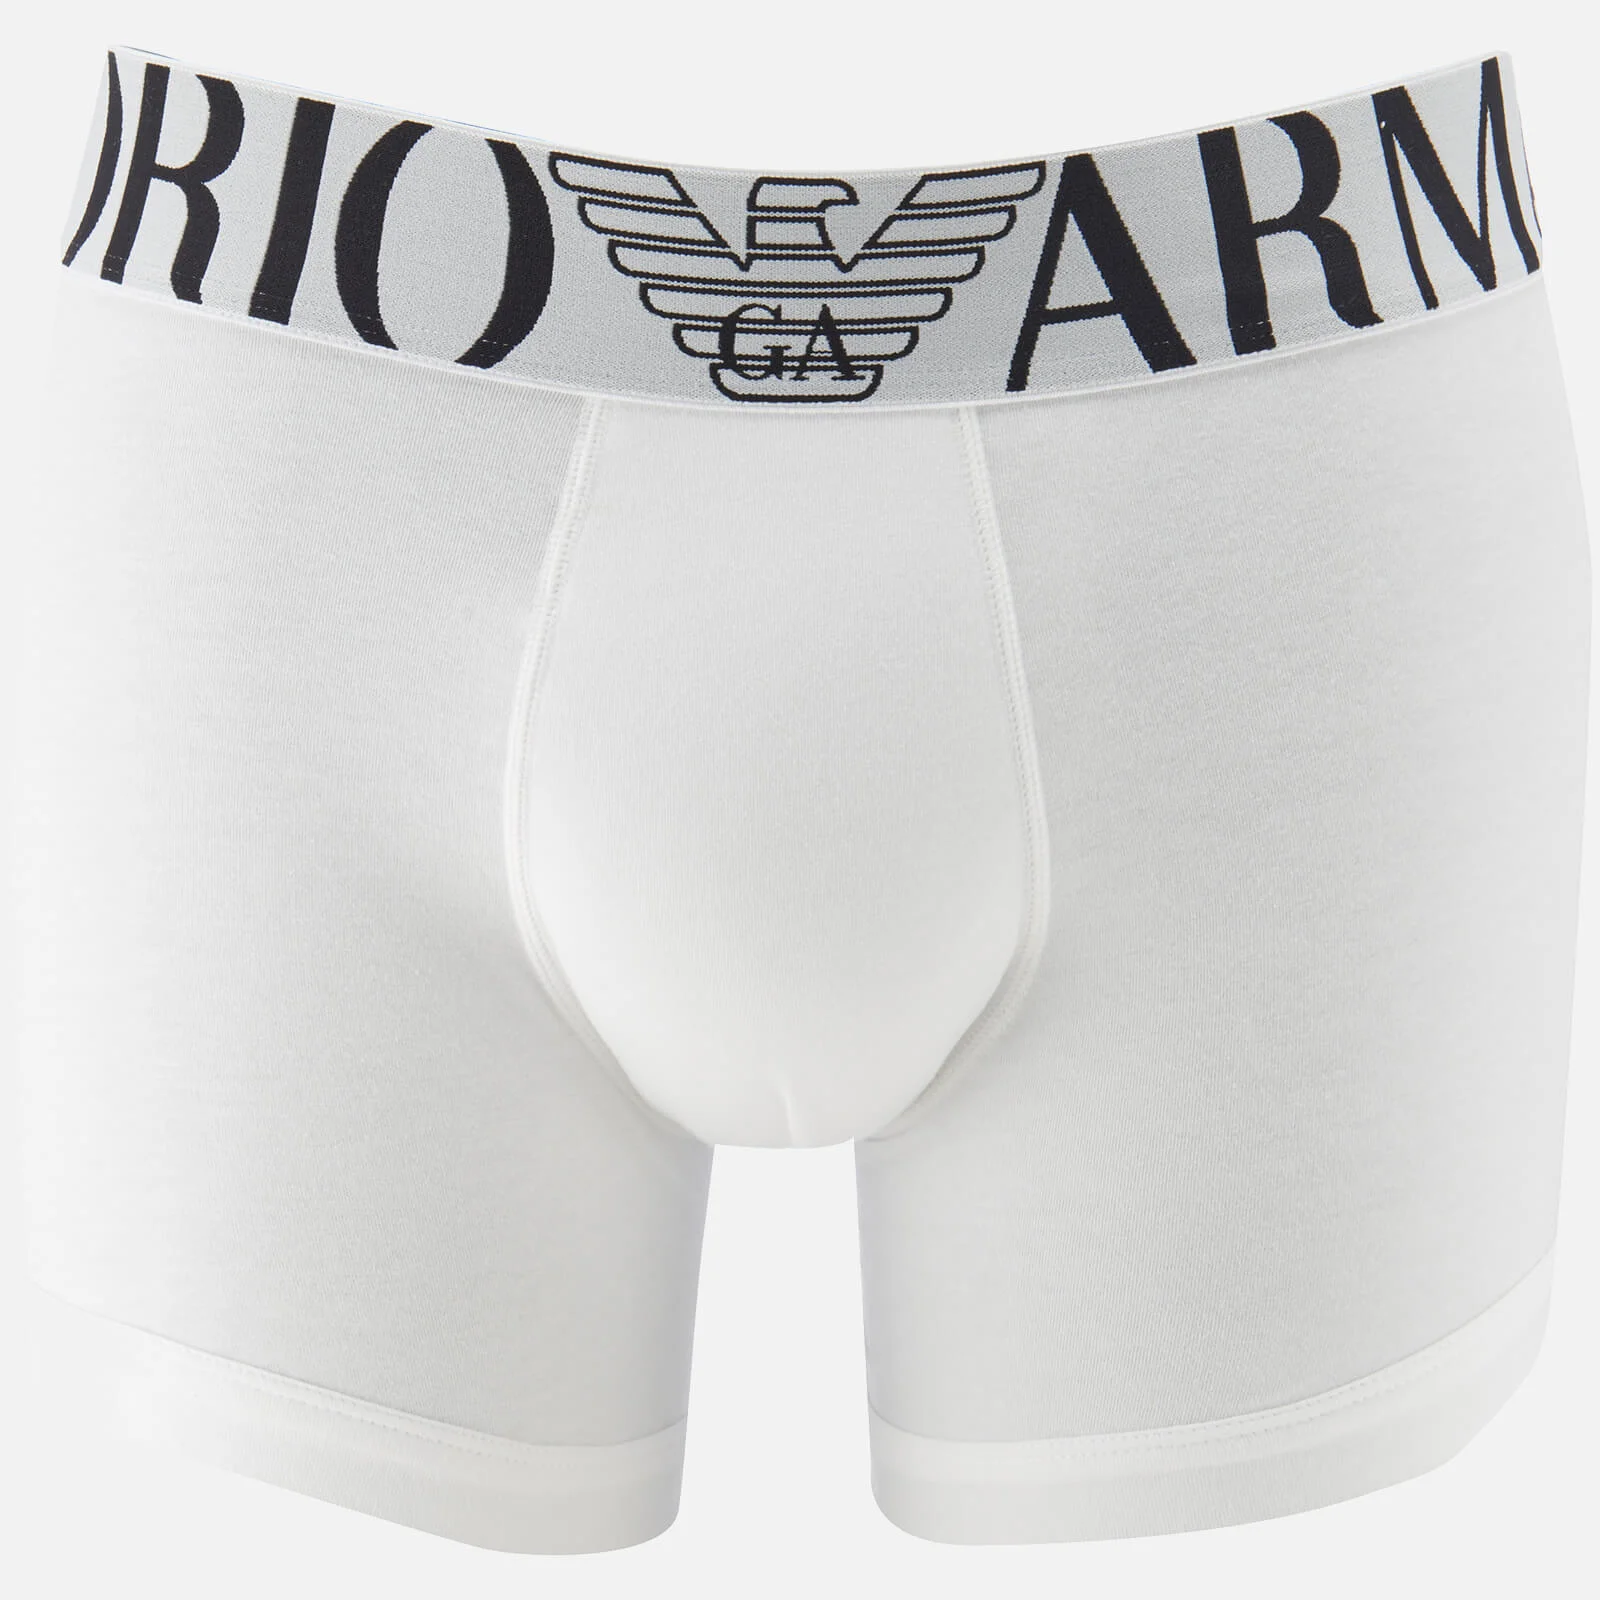 Emporio Armani Men's Stretch Cotton Boxer Shorts - Bianco Image 1